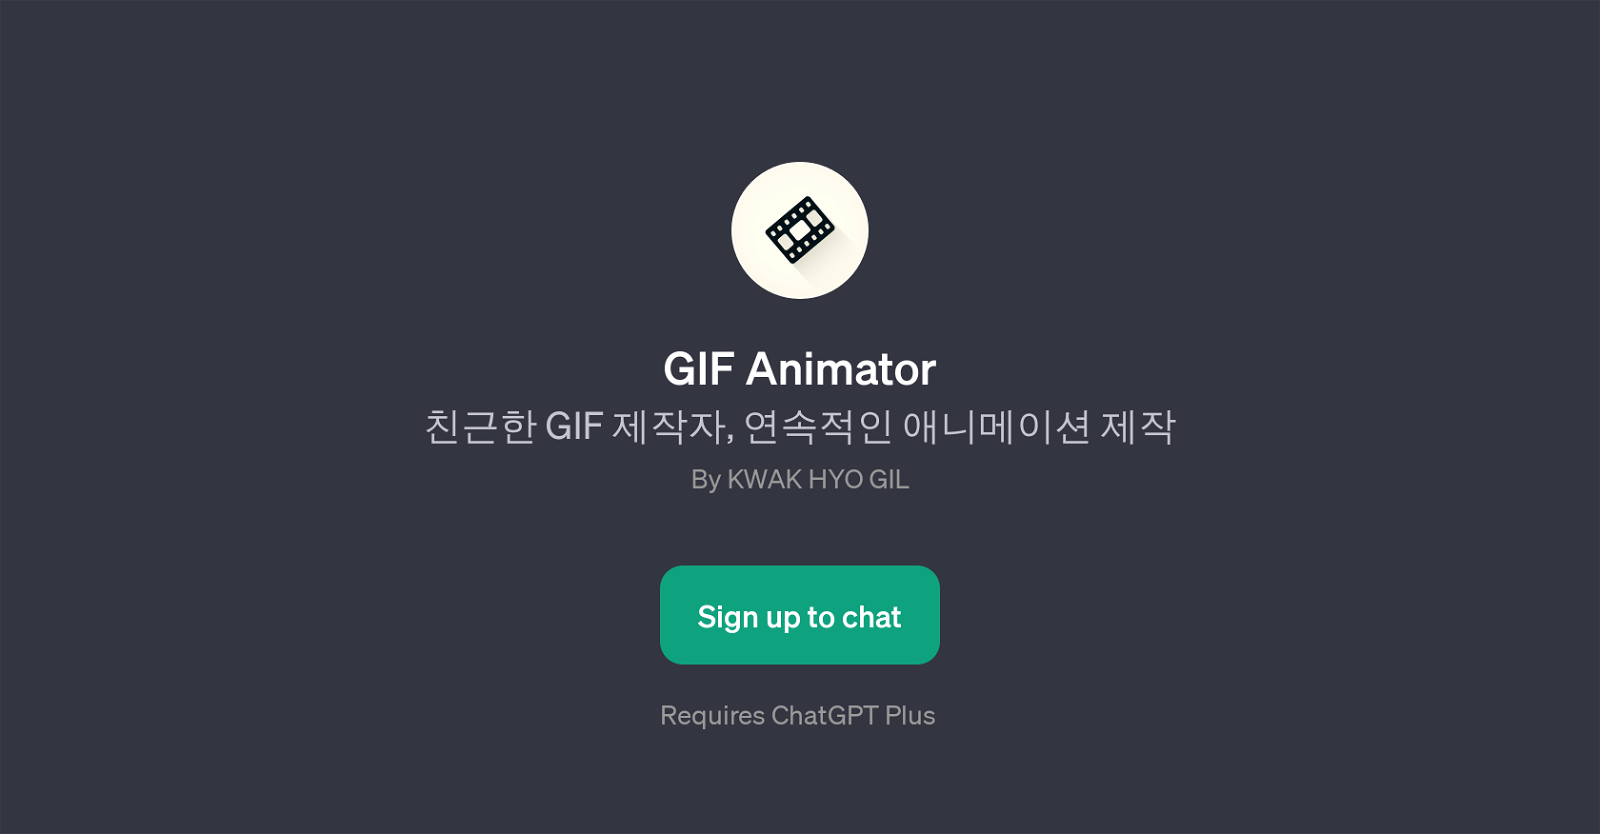 GIF Animator website